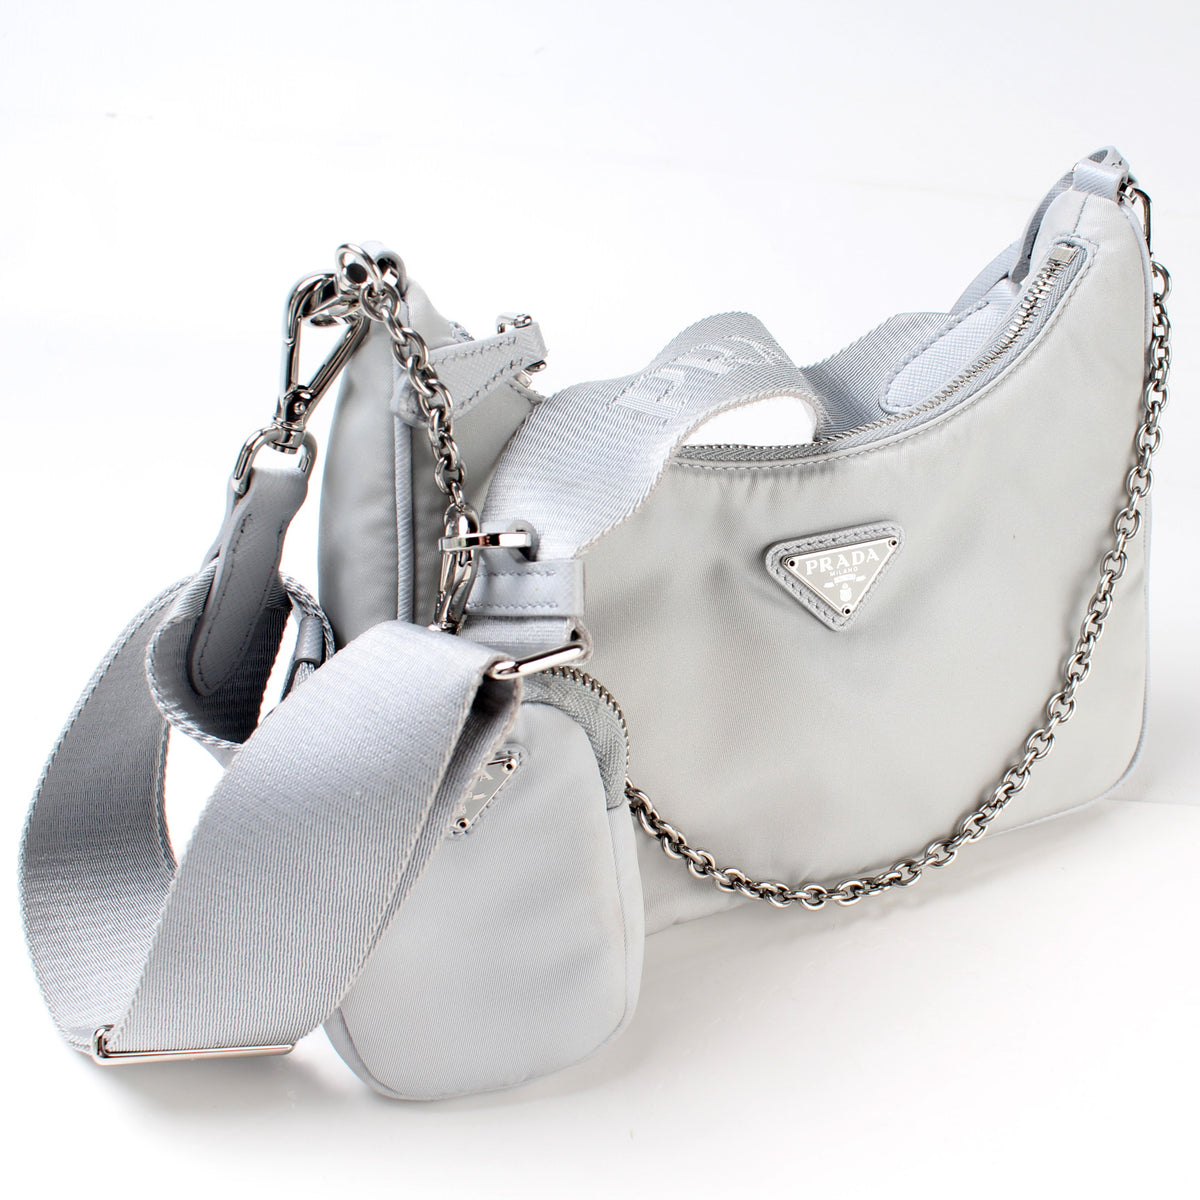 Prada Re-Edition 2005 Calfskin Chain Shoulder Bag